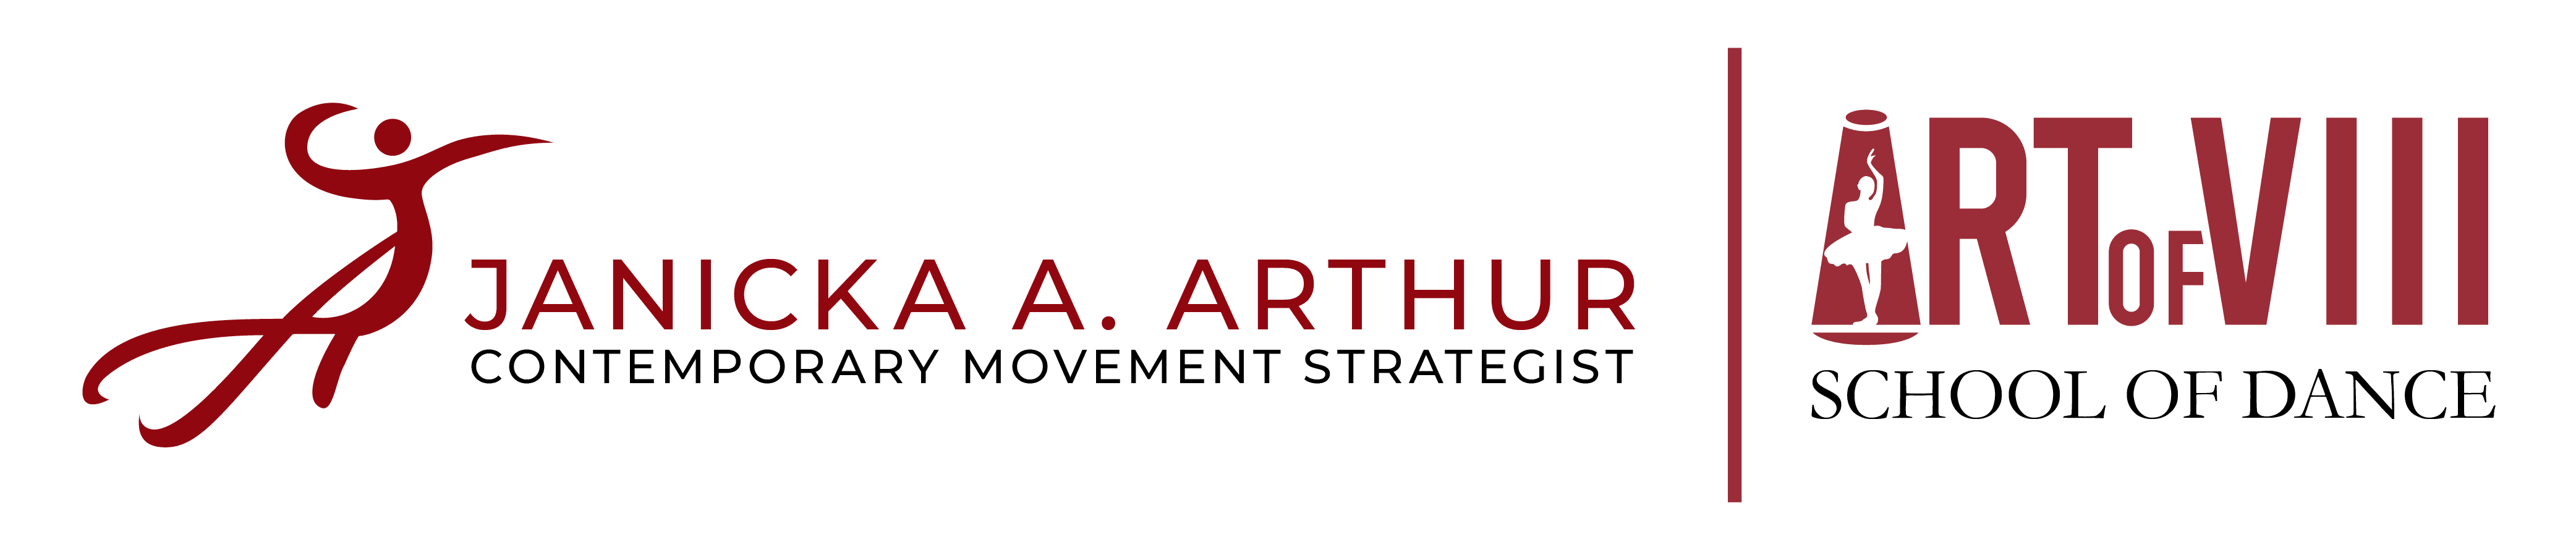 Janicka A. Arthur Logo